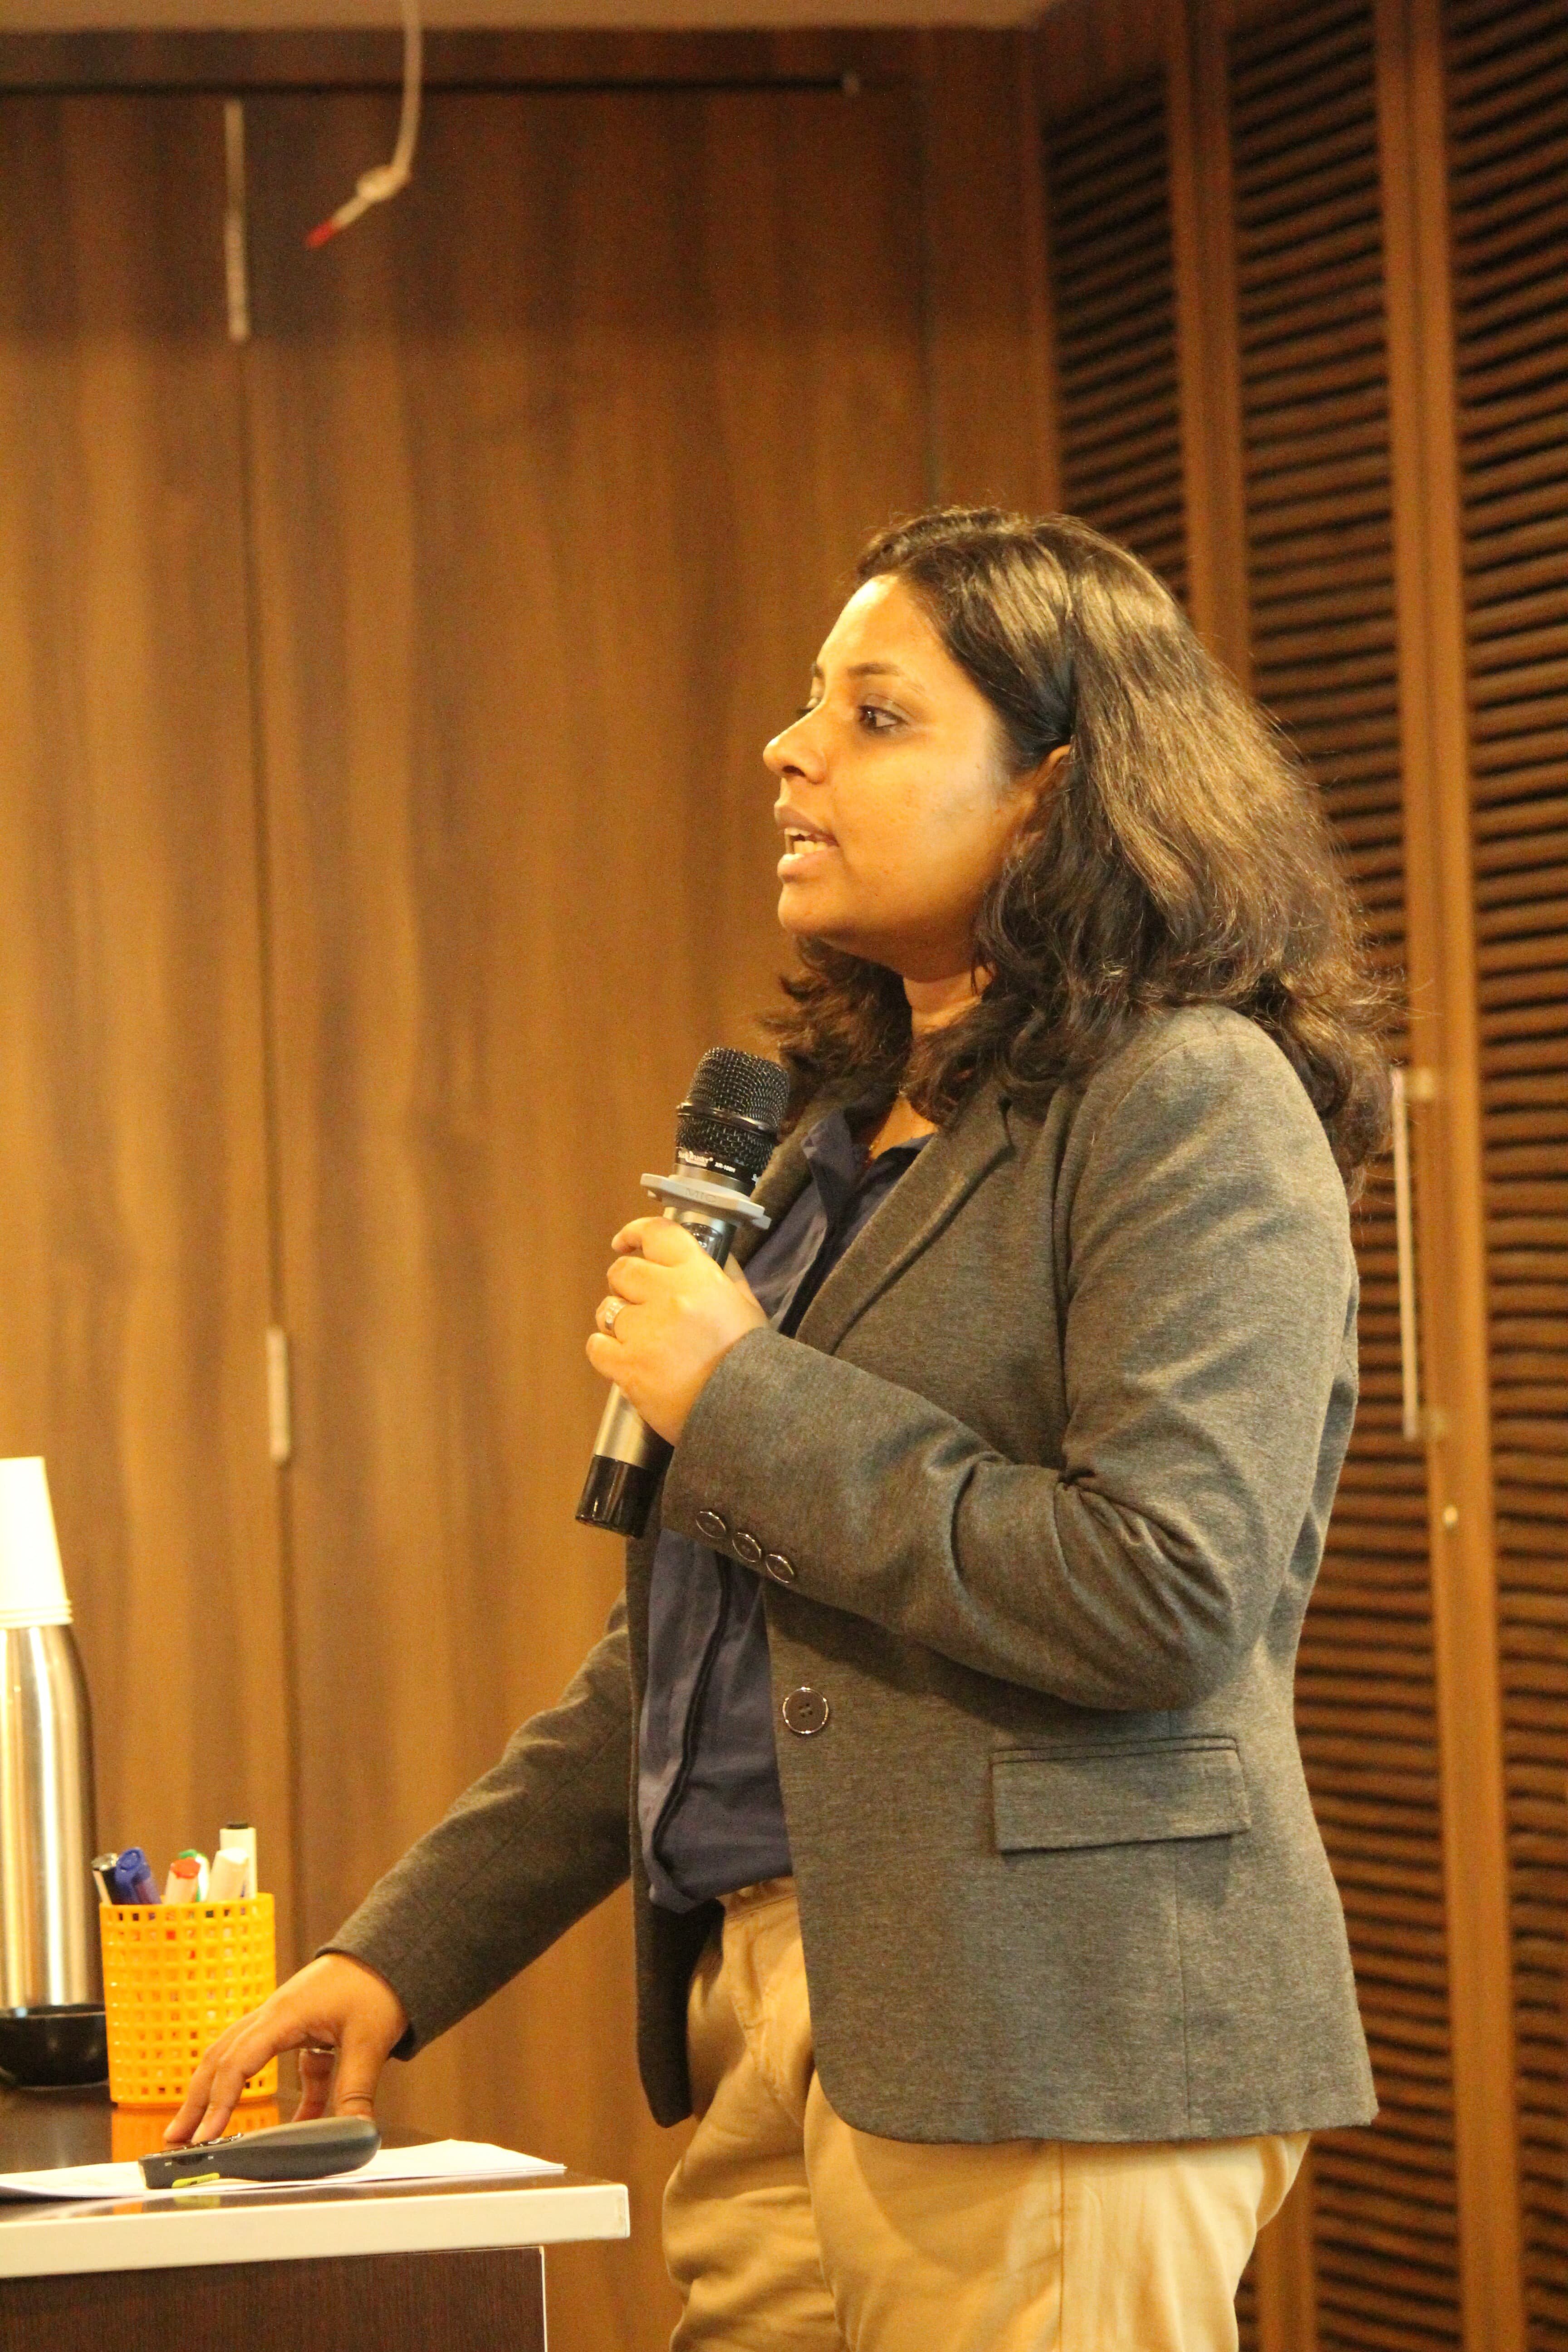 Sirisha Inapurapu Founder at Branding by Pixels giving a talk on Digital Marketing